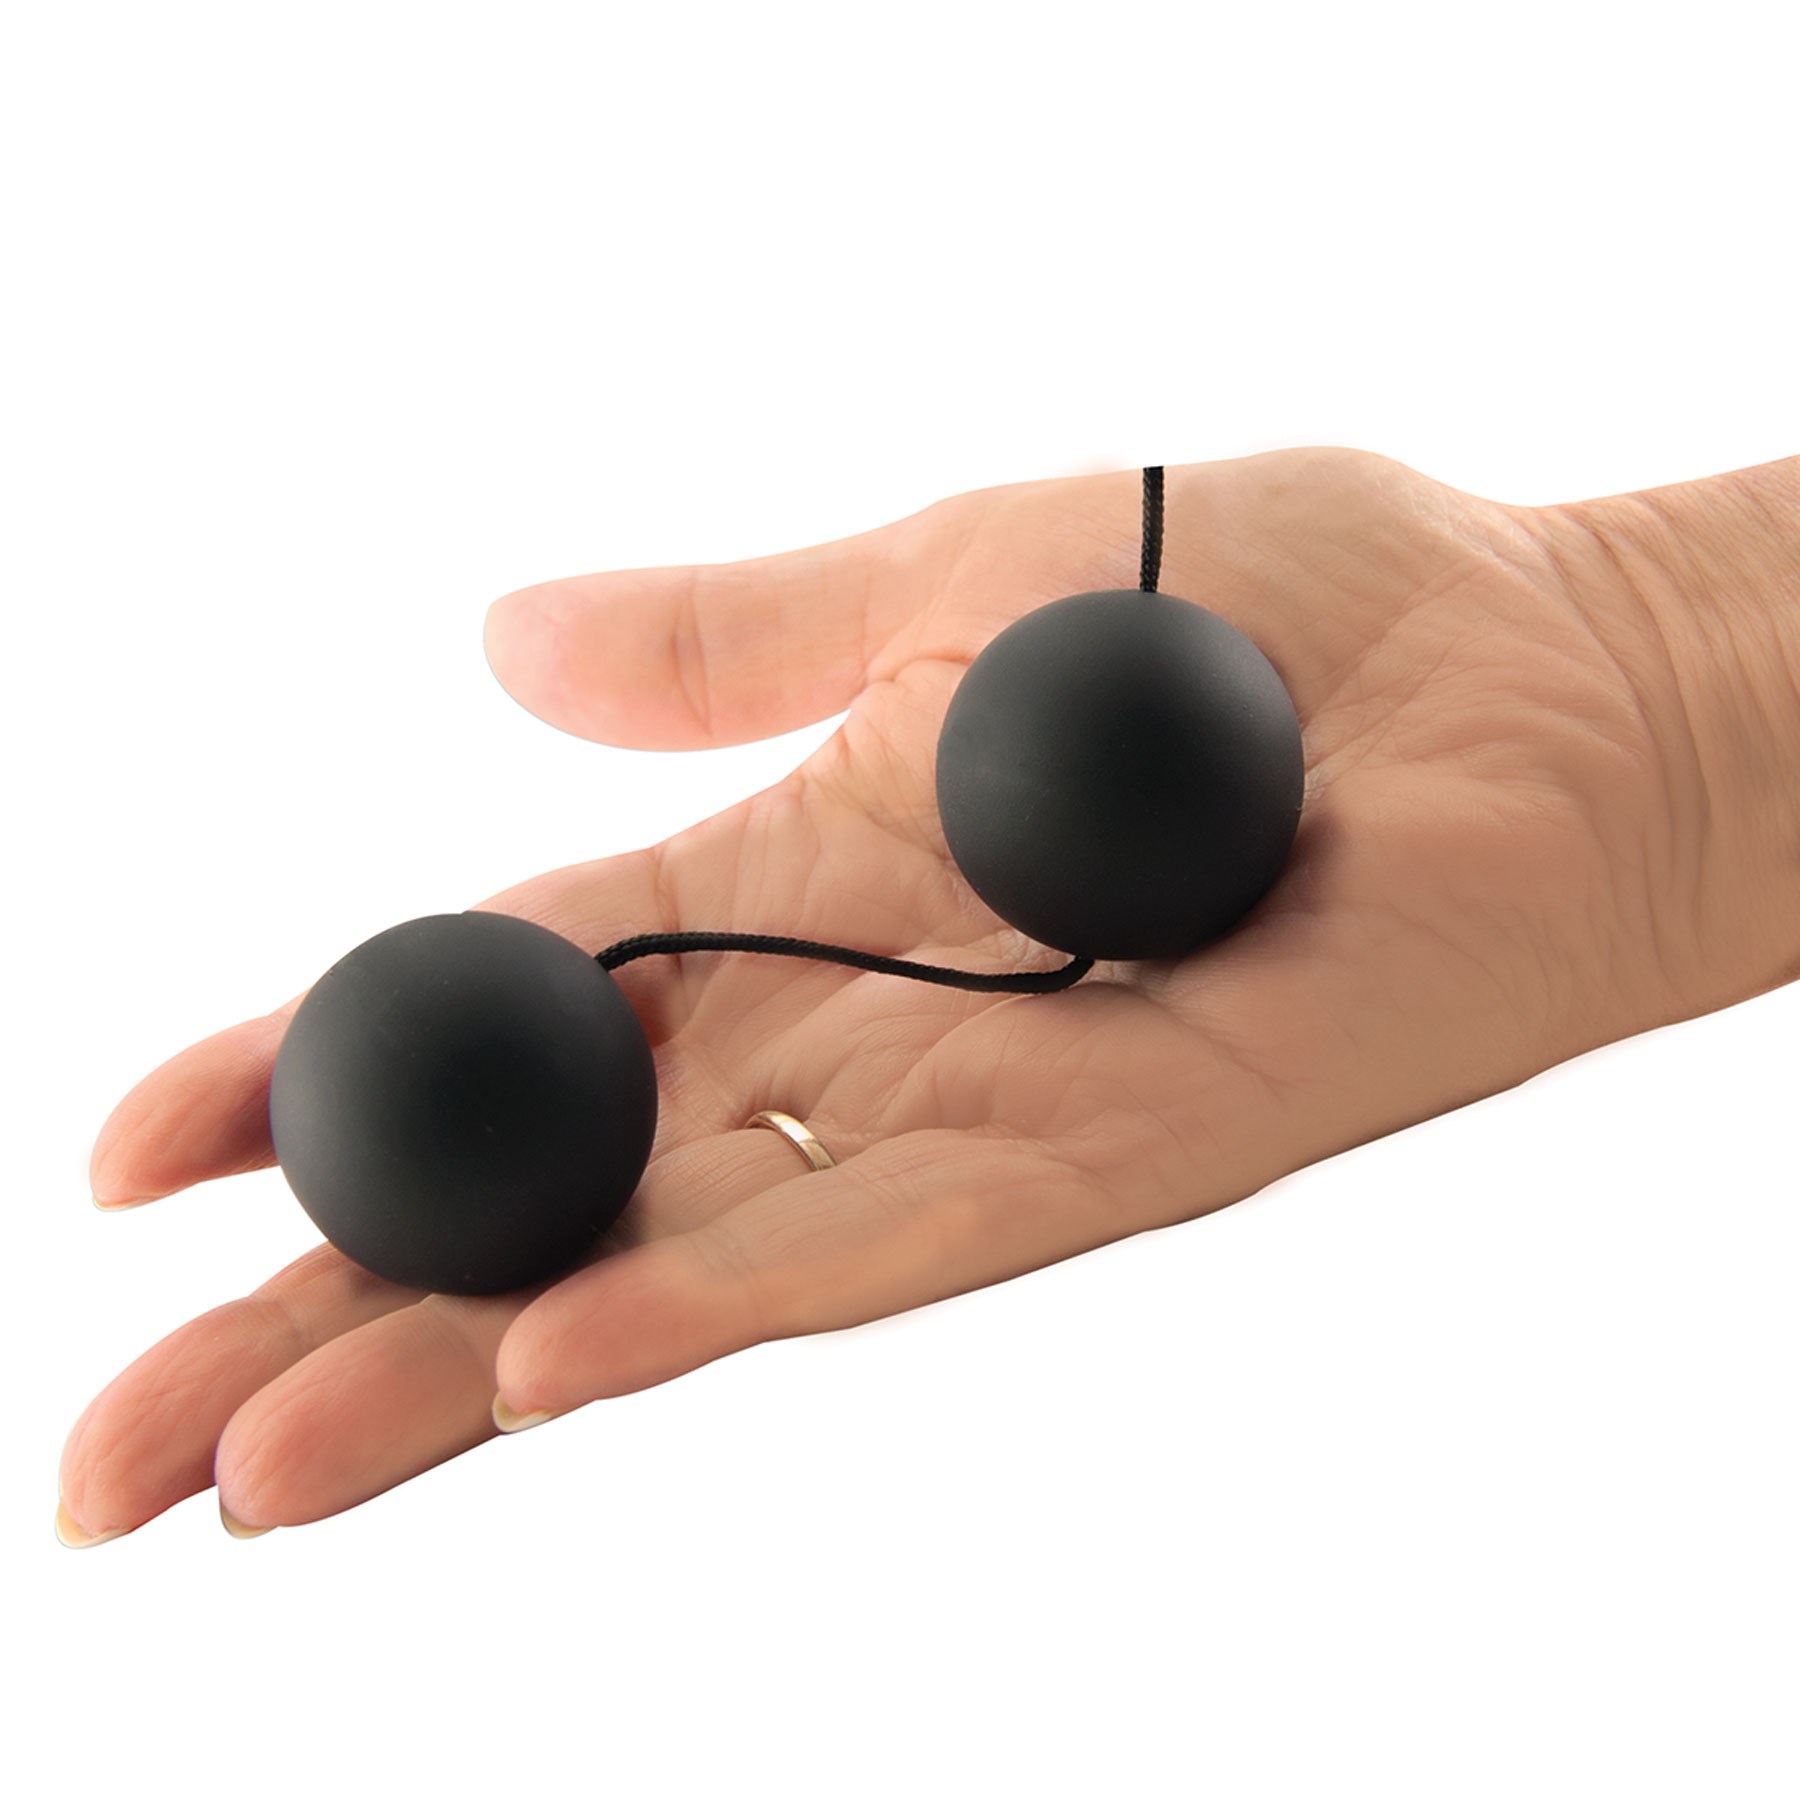 Deluxe Vibro Balls hand holding balls